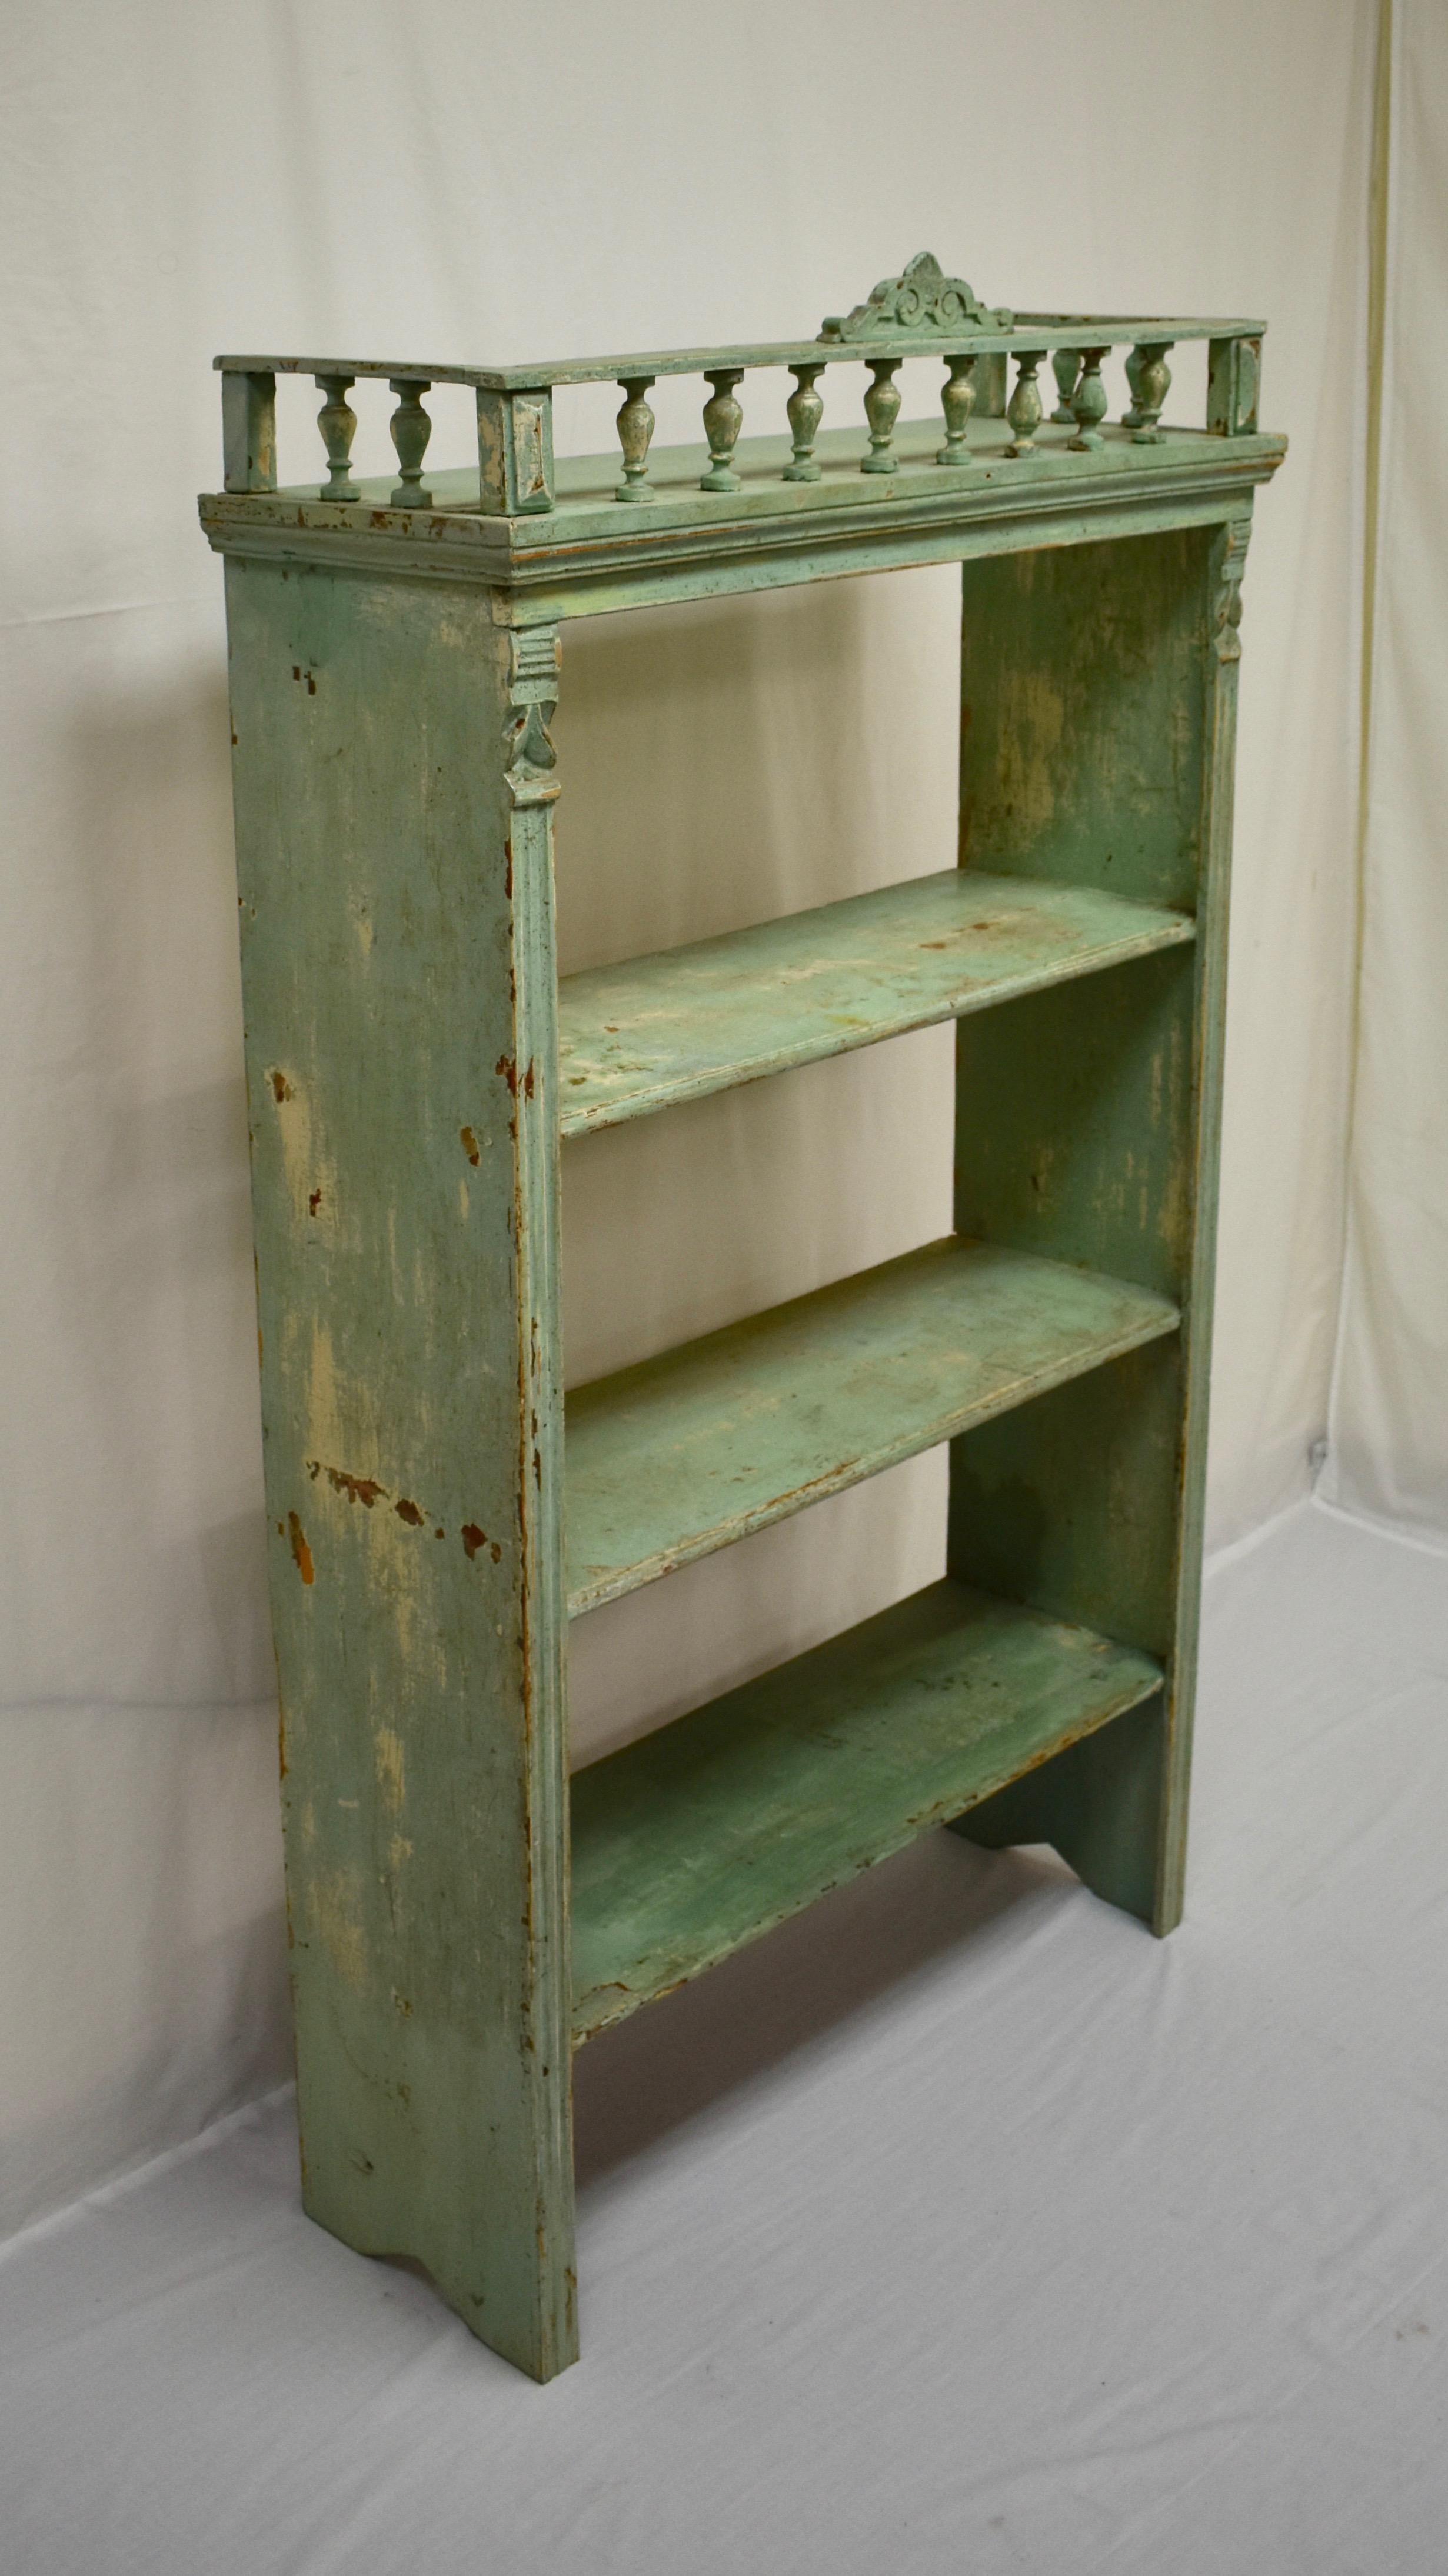 Country Pine Painted Utility Shelf or Bookshelf